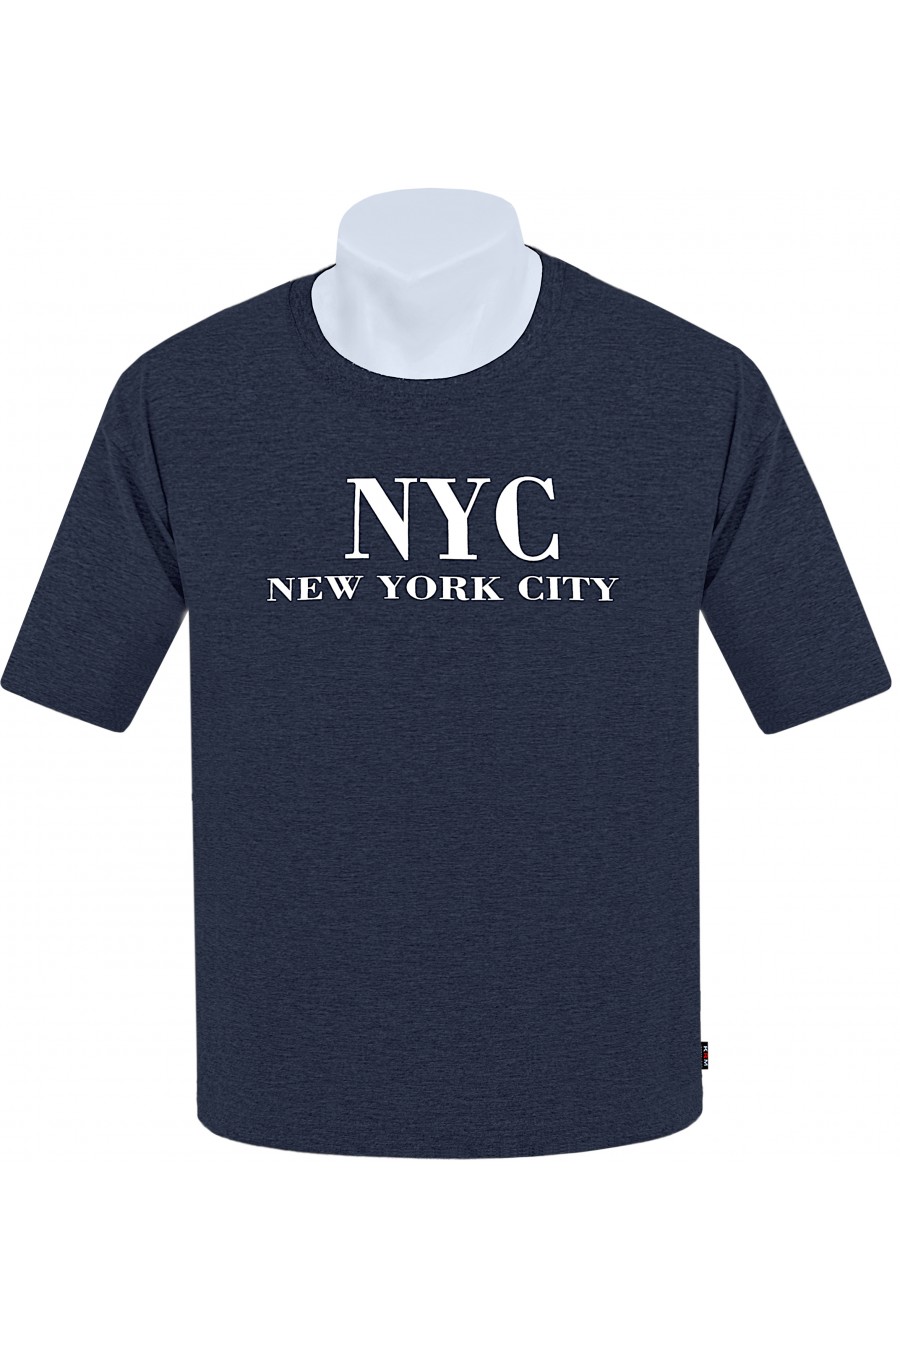 Koszulka NEW YORK CITY M-8XL bawełna jeans